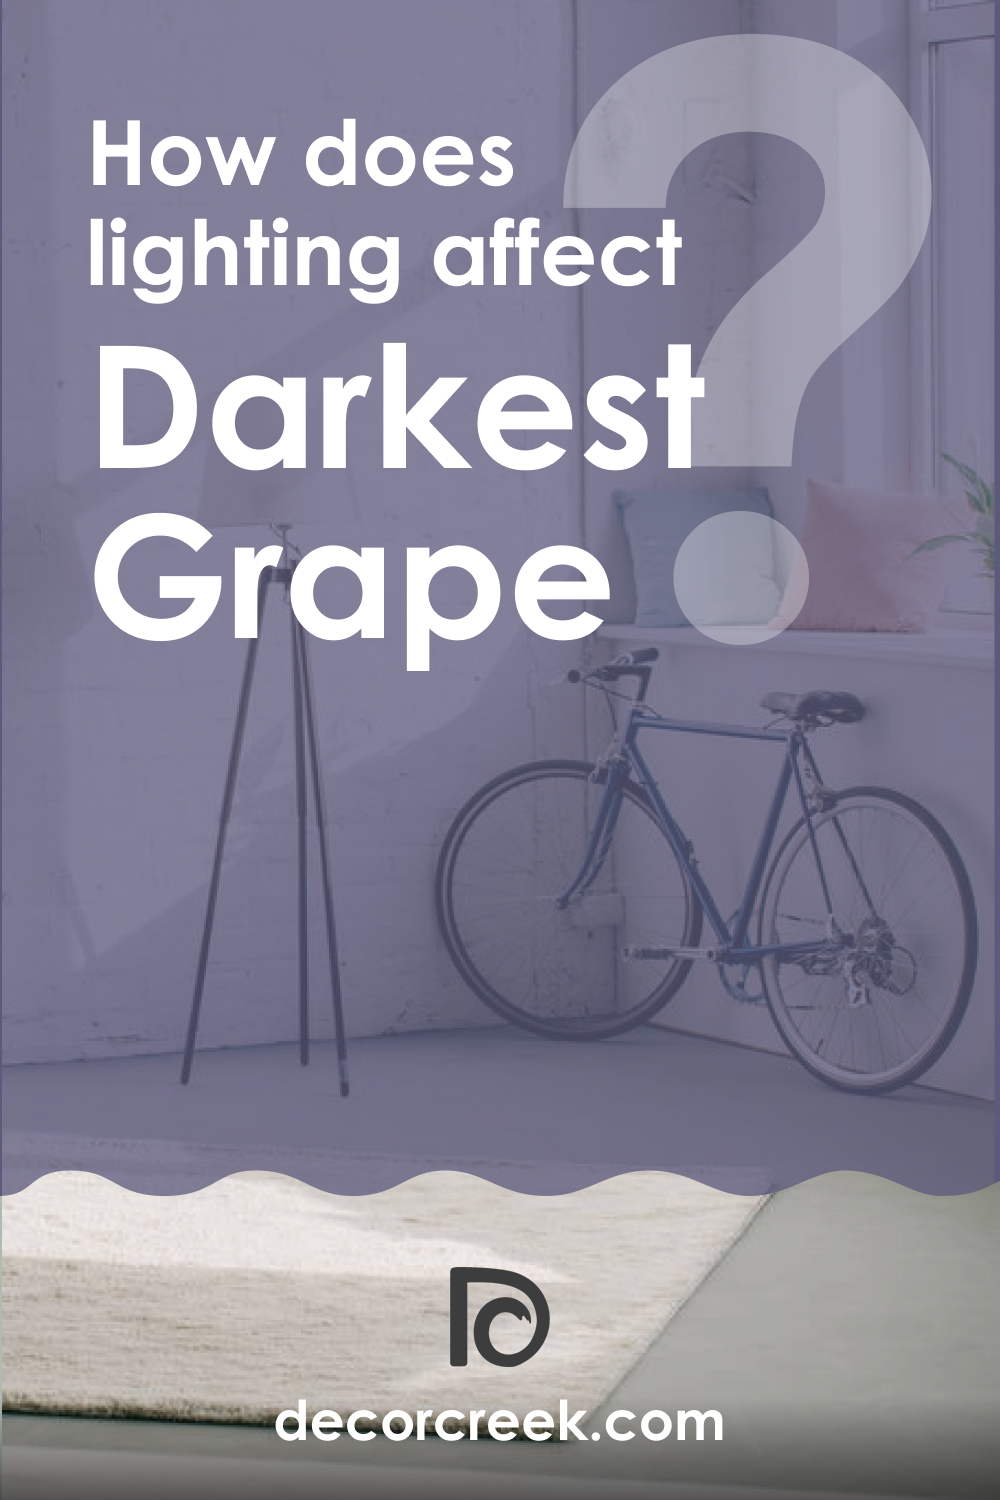 How Does Lighting Affect Darkest Grape 2069-30?